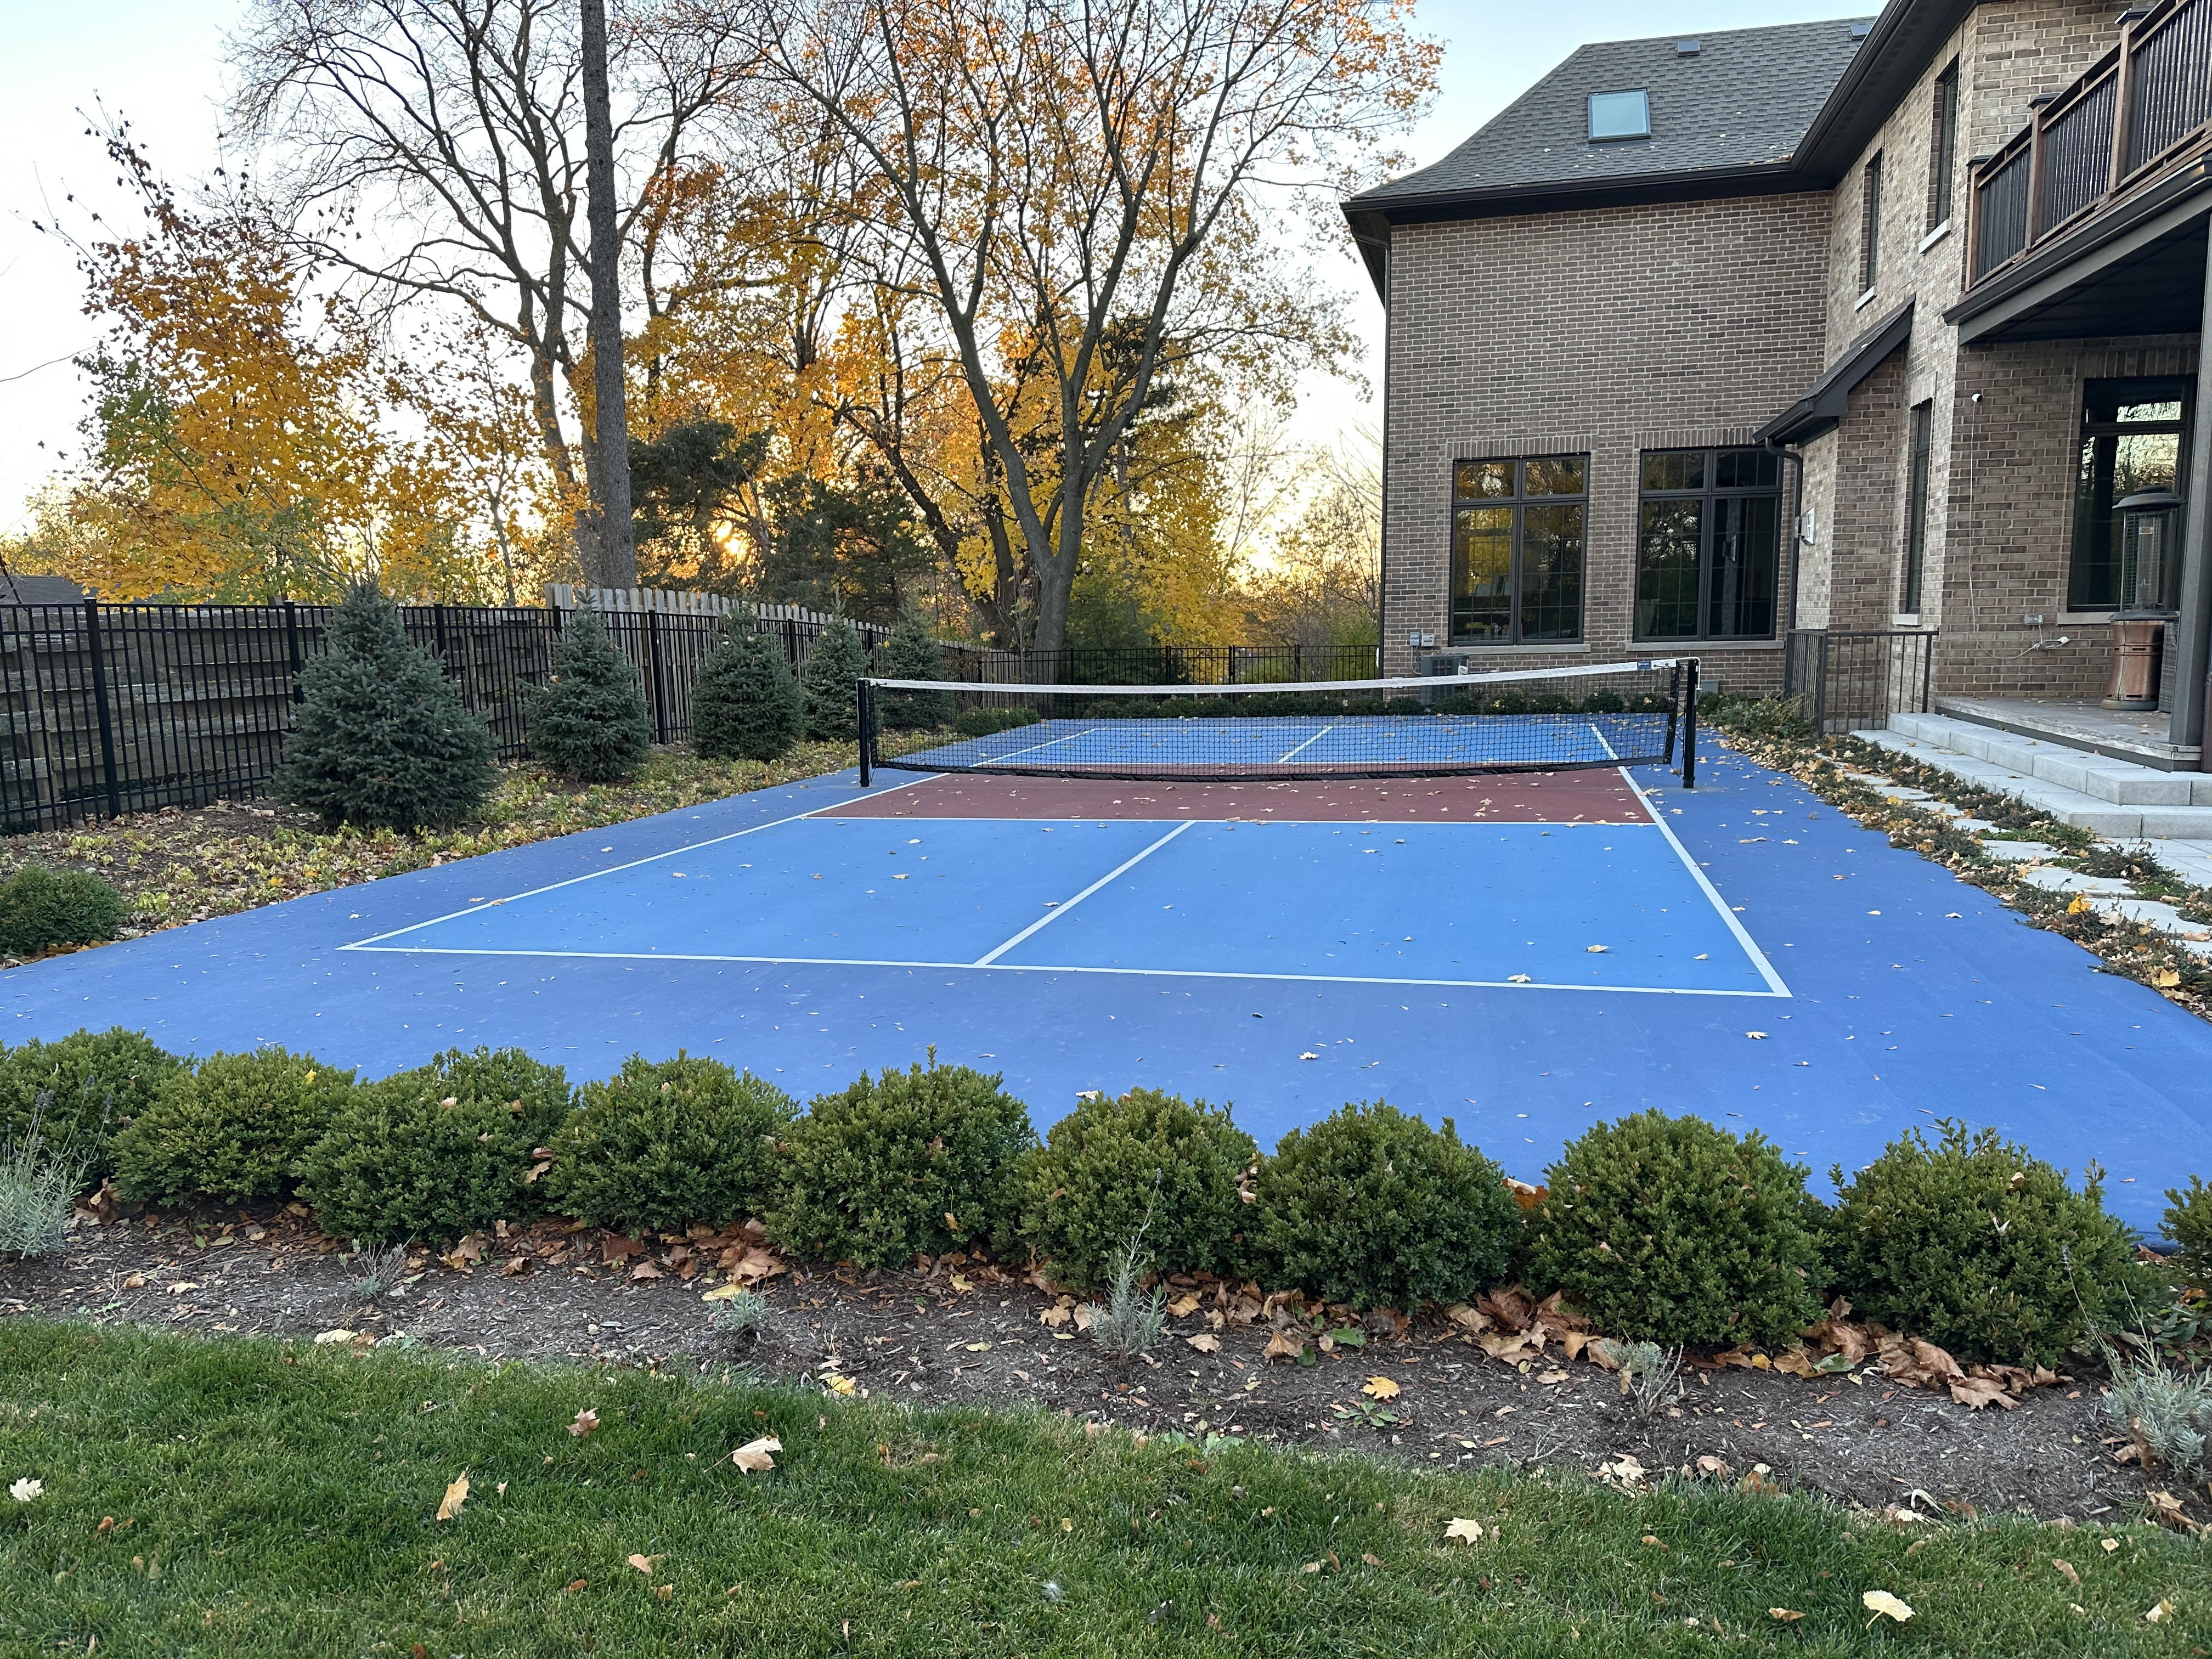 A backyard pickleball court